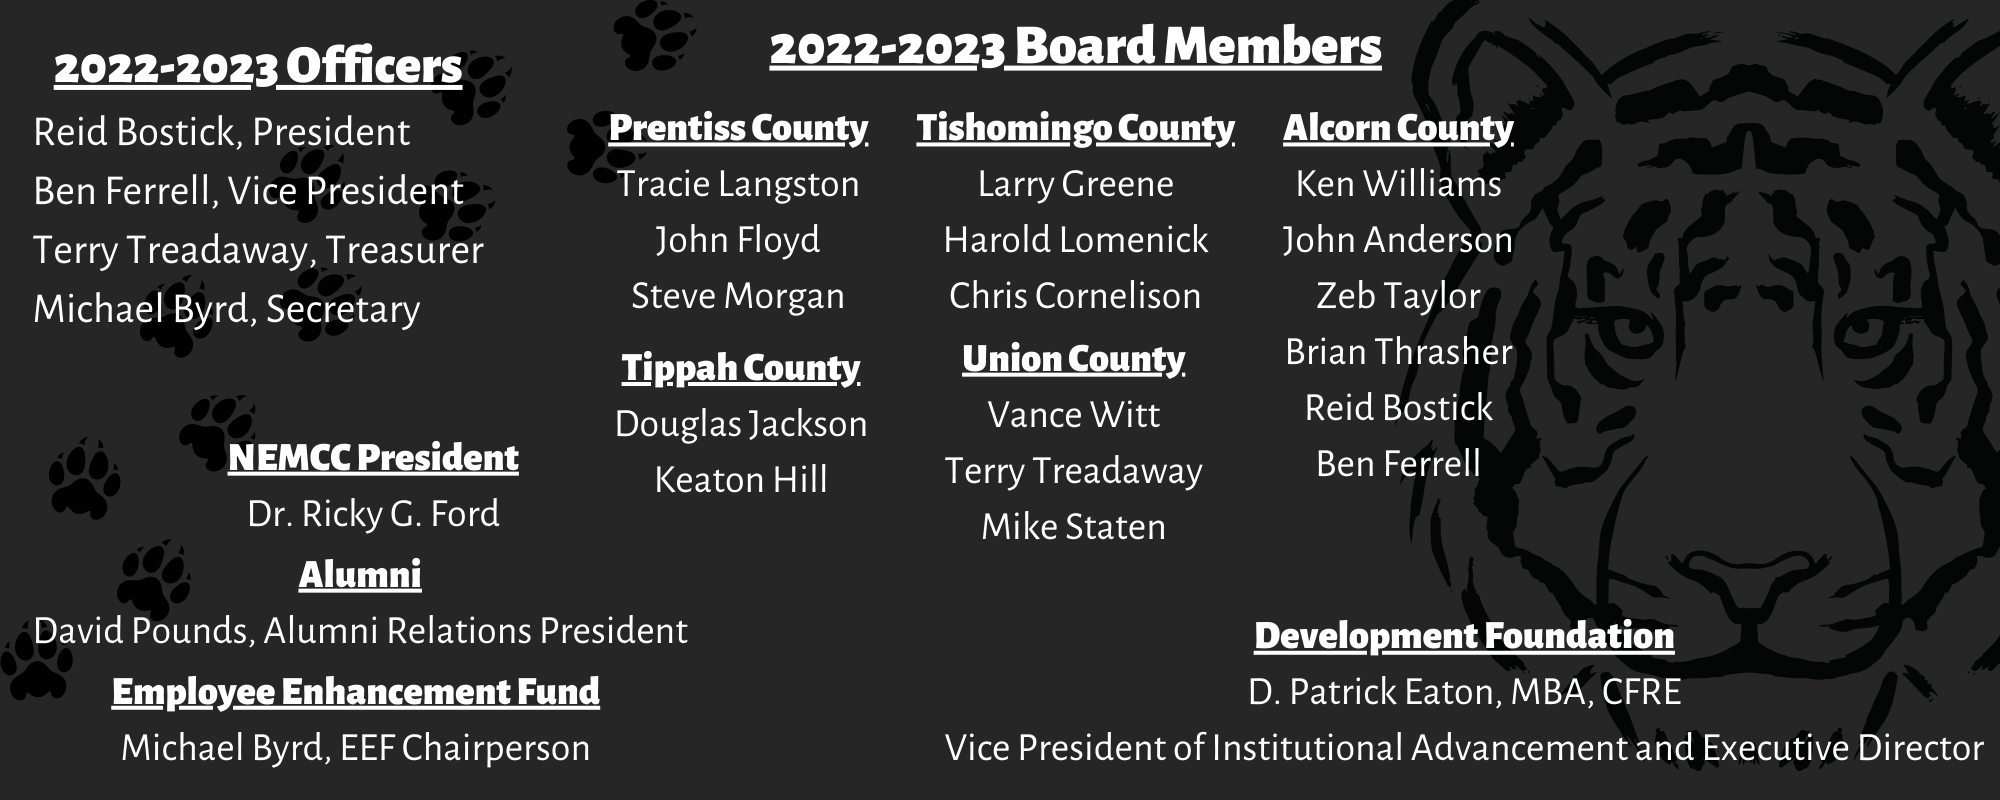 Listing of Board Members